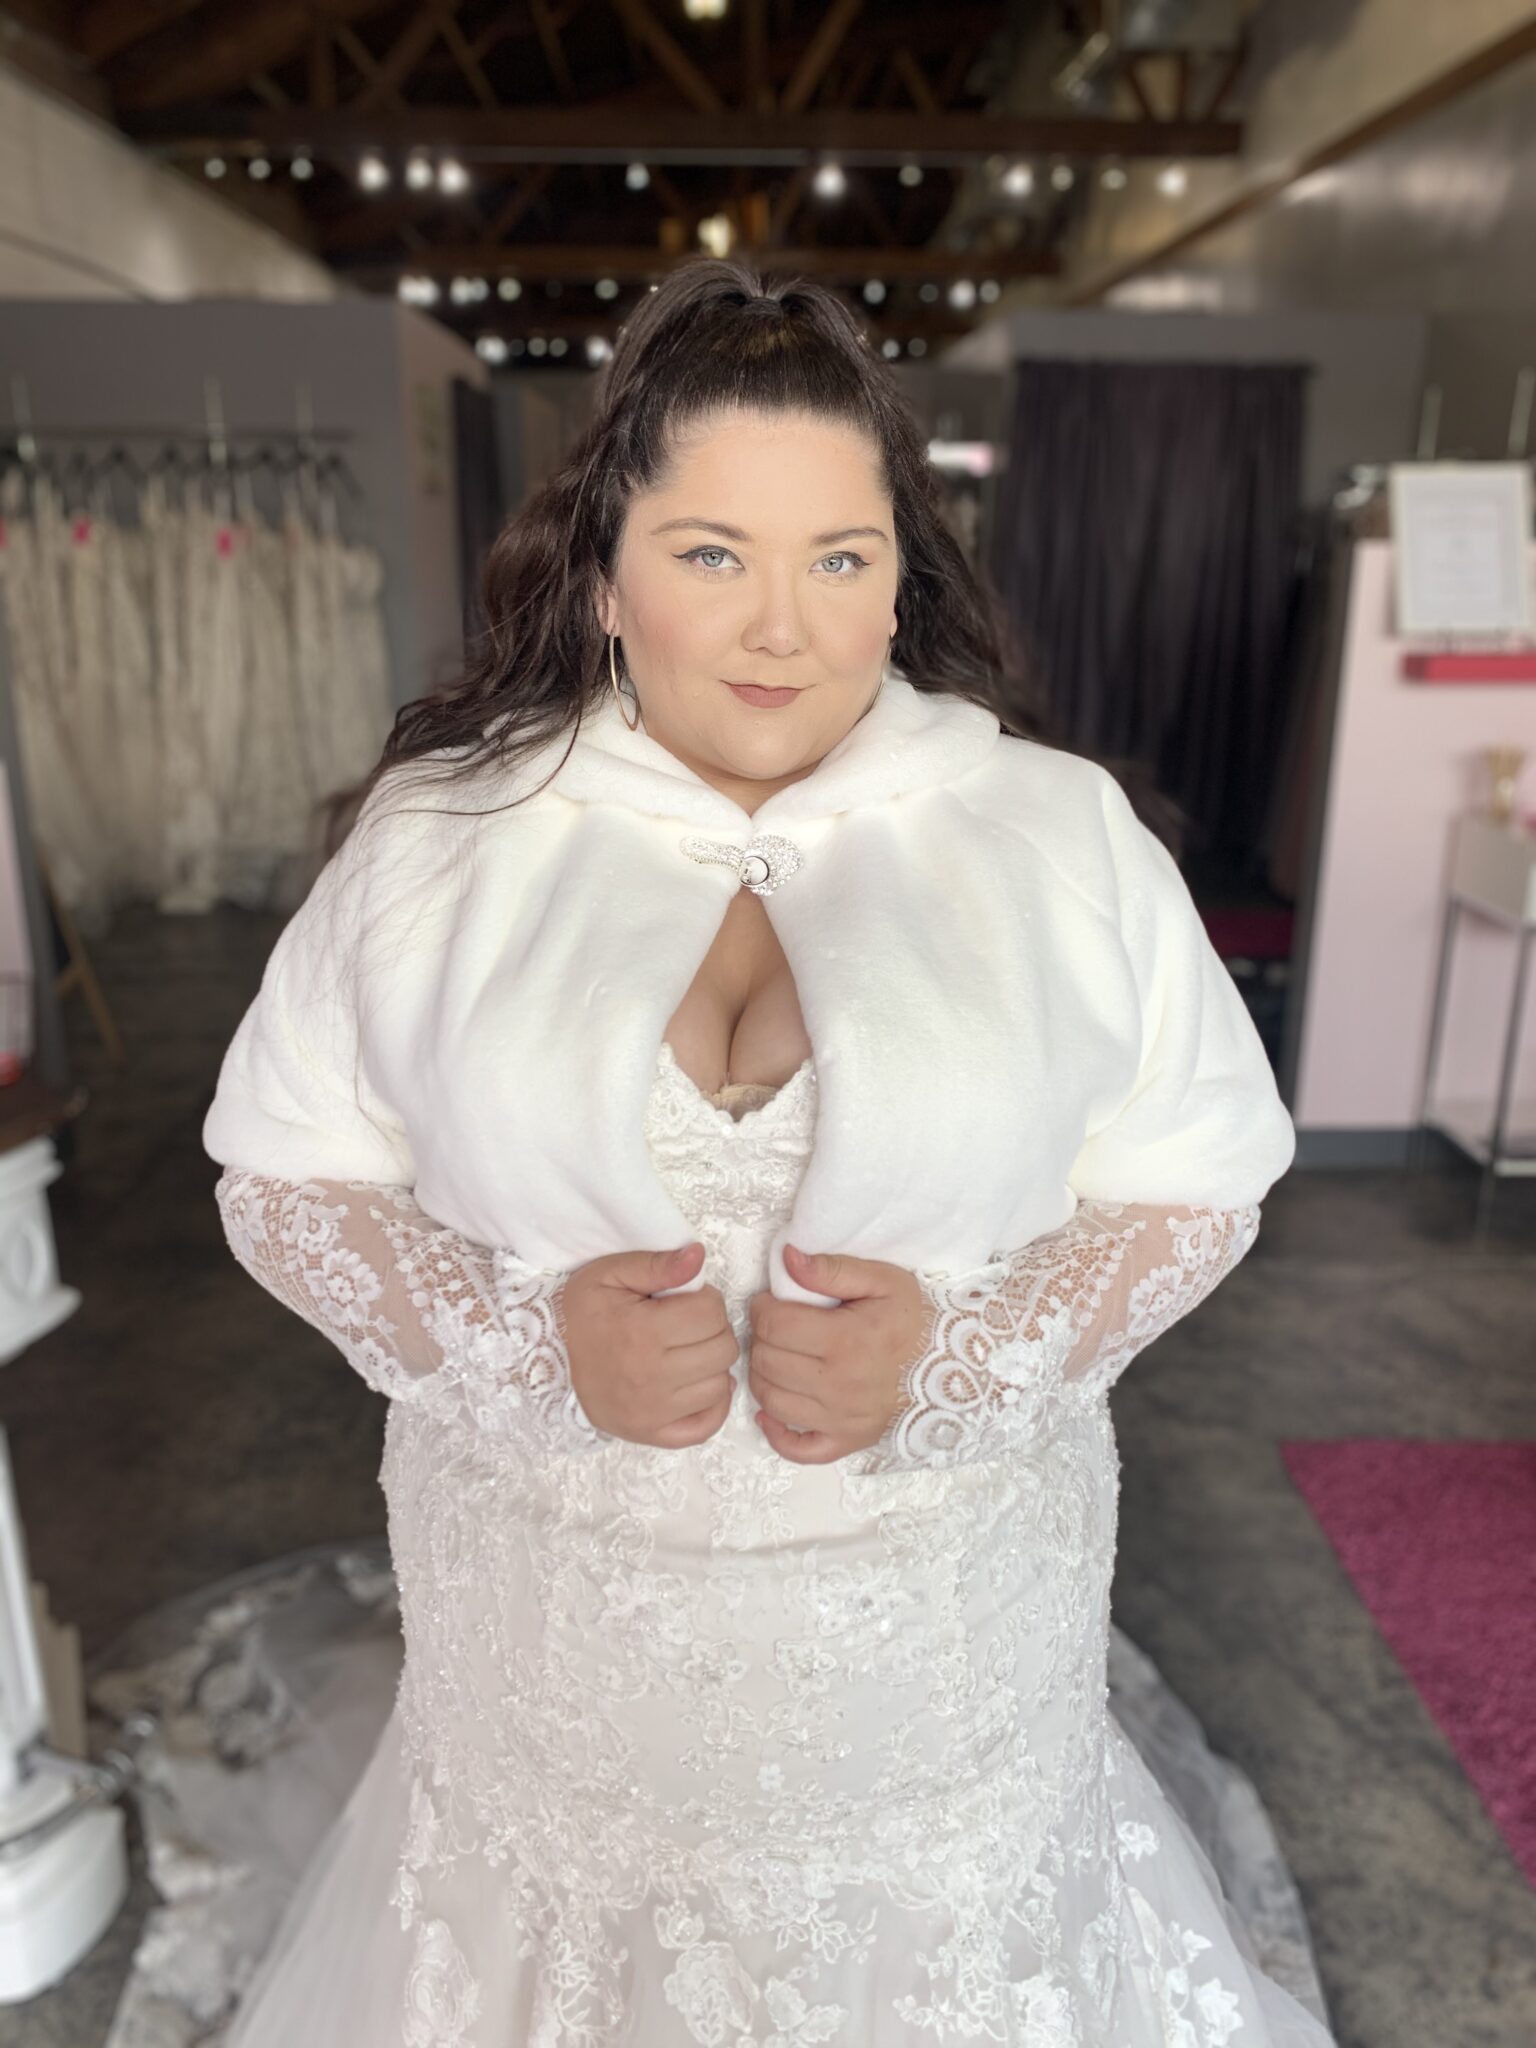 Fantastic Faux Wedding Furs are HERE! - Strut Bridal Salon